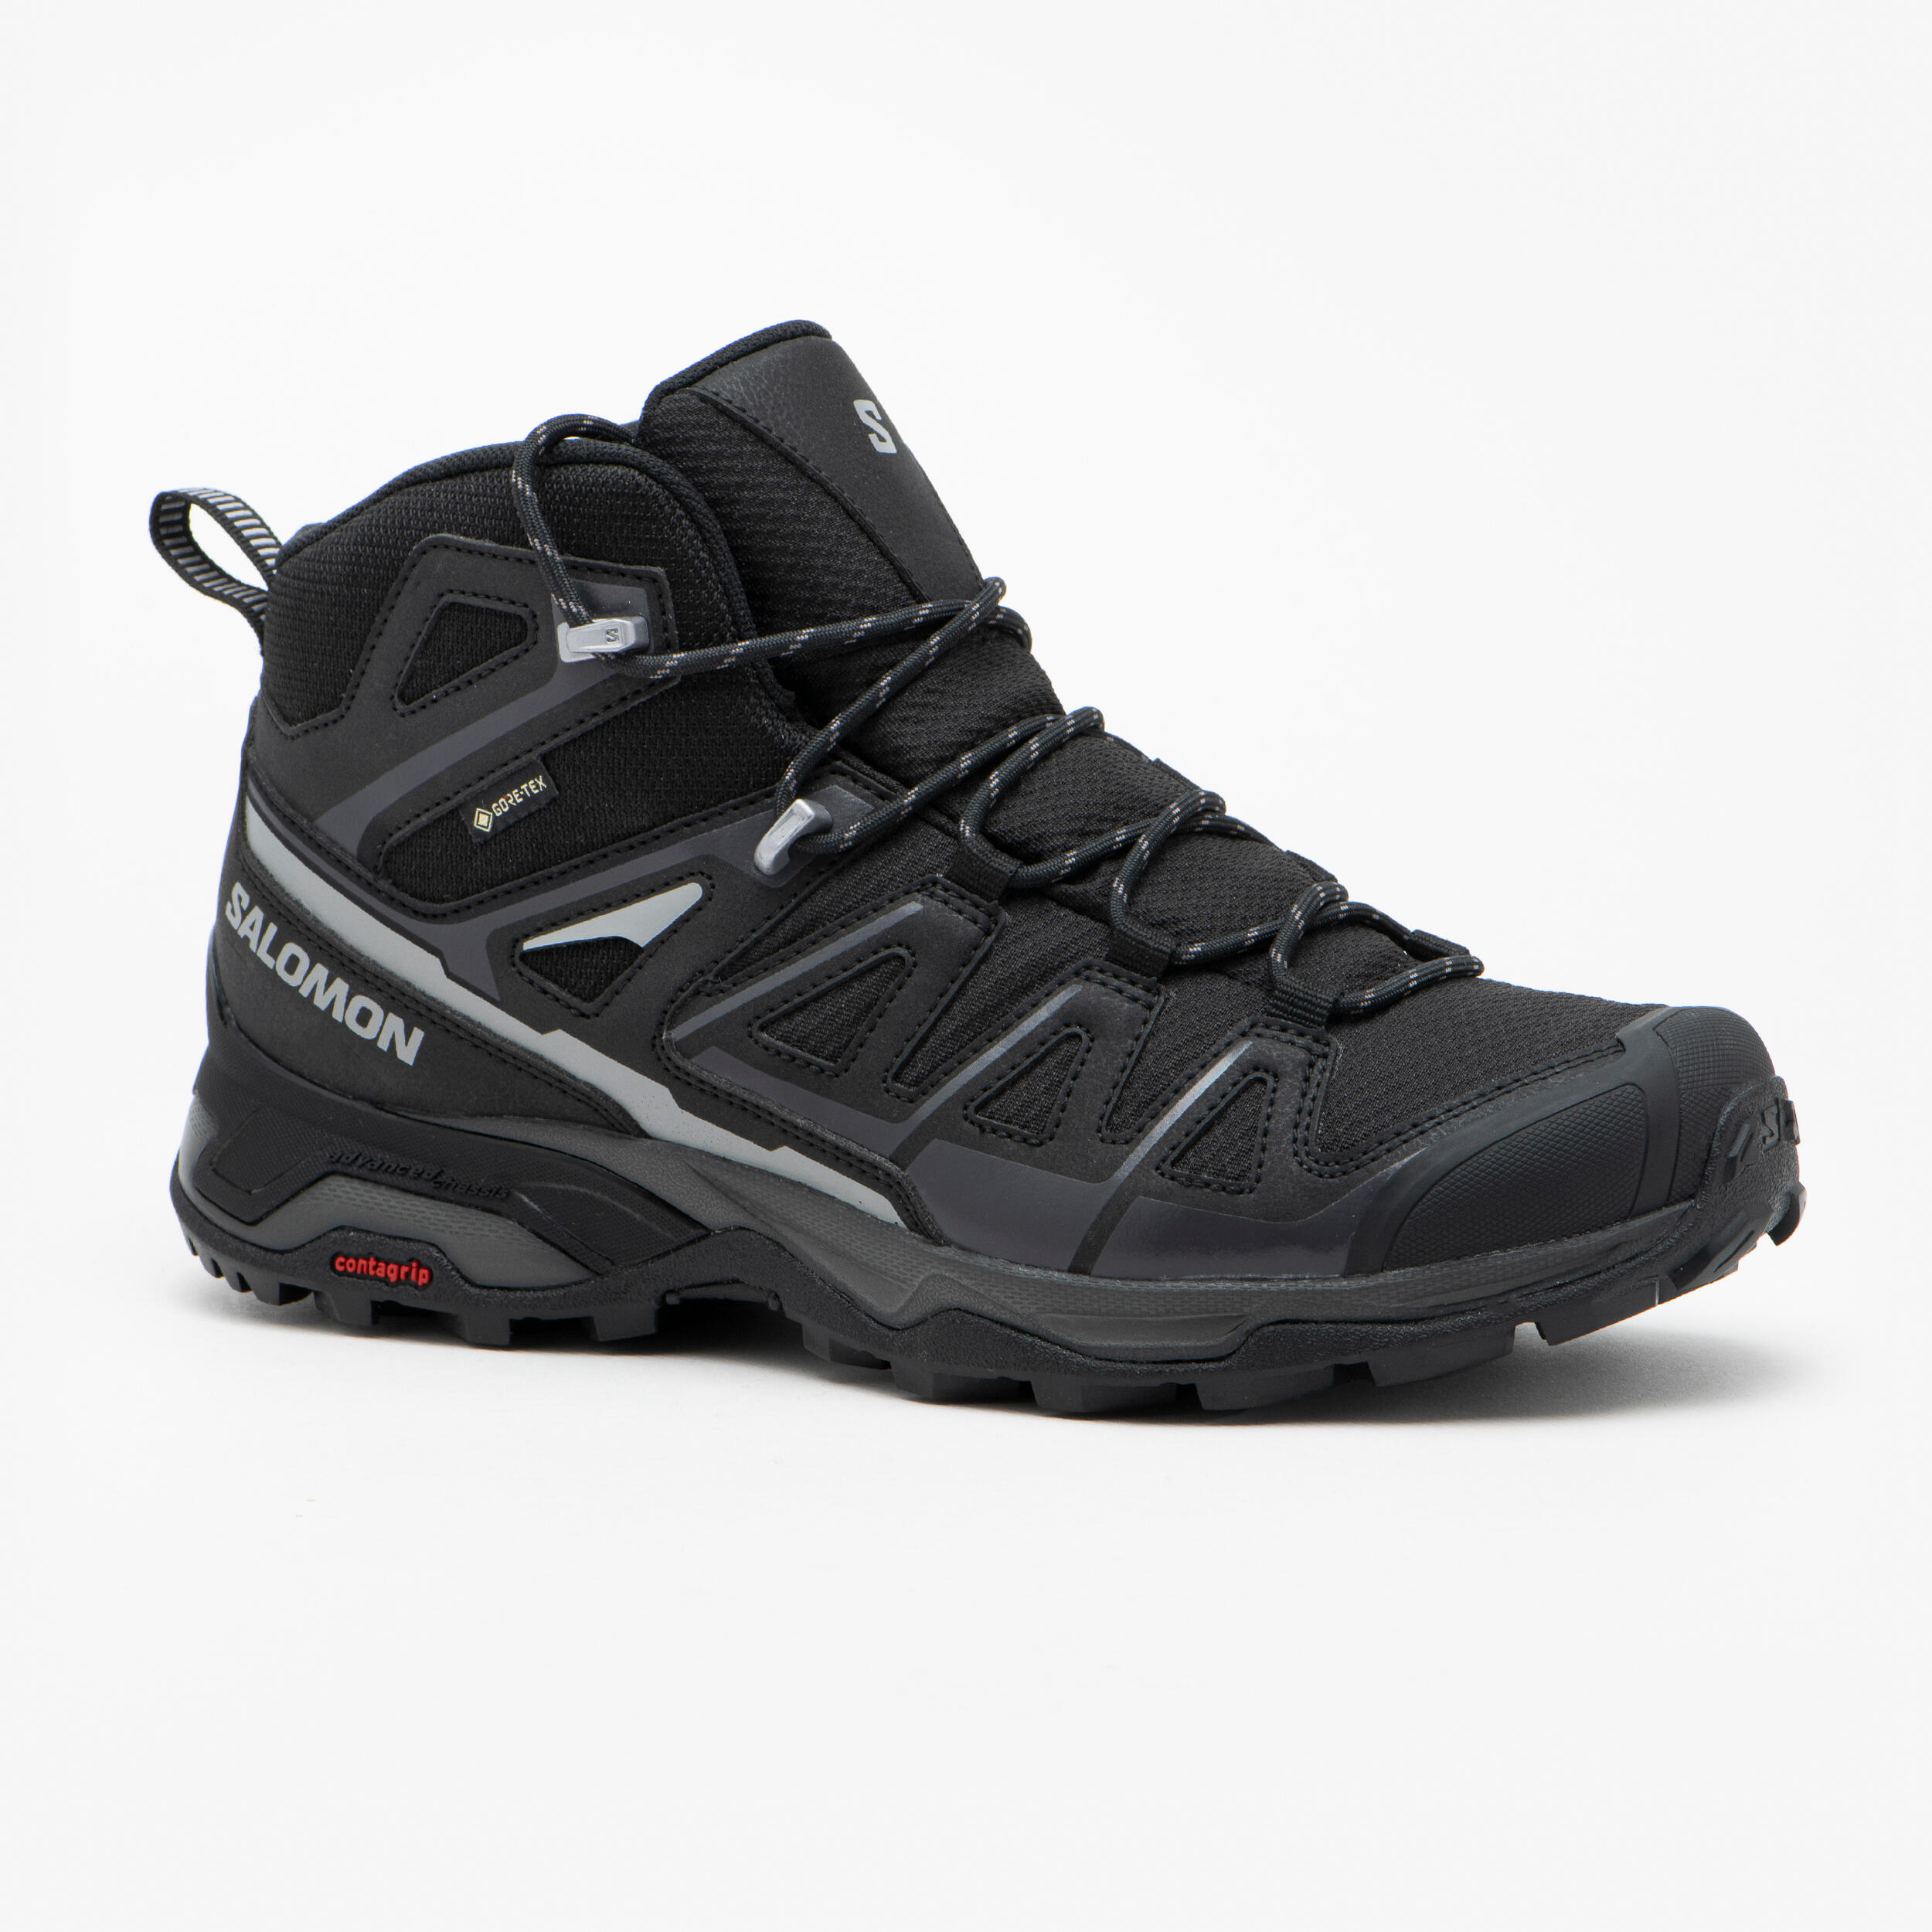 Salomon Men’s Waterproof Hiking Boots - X Ultra Pioneer 2 GTX